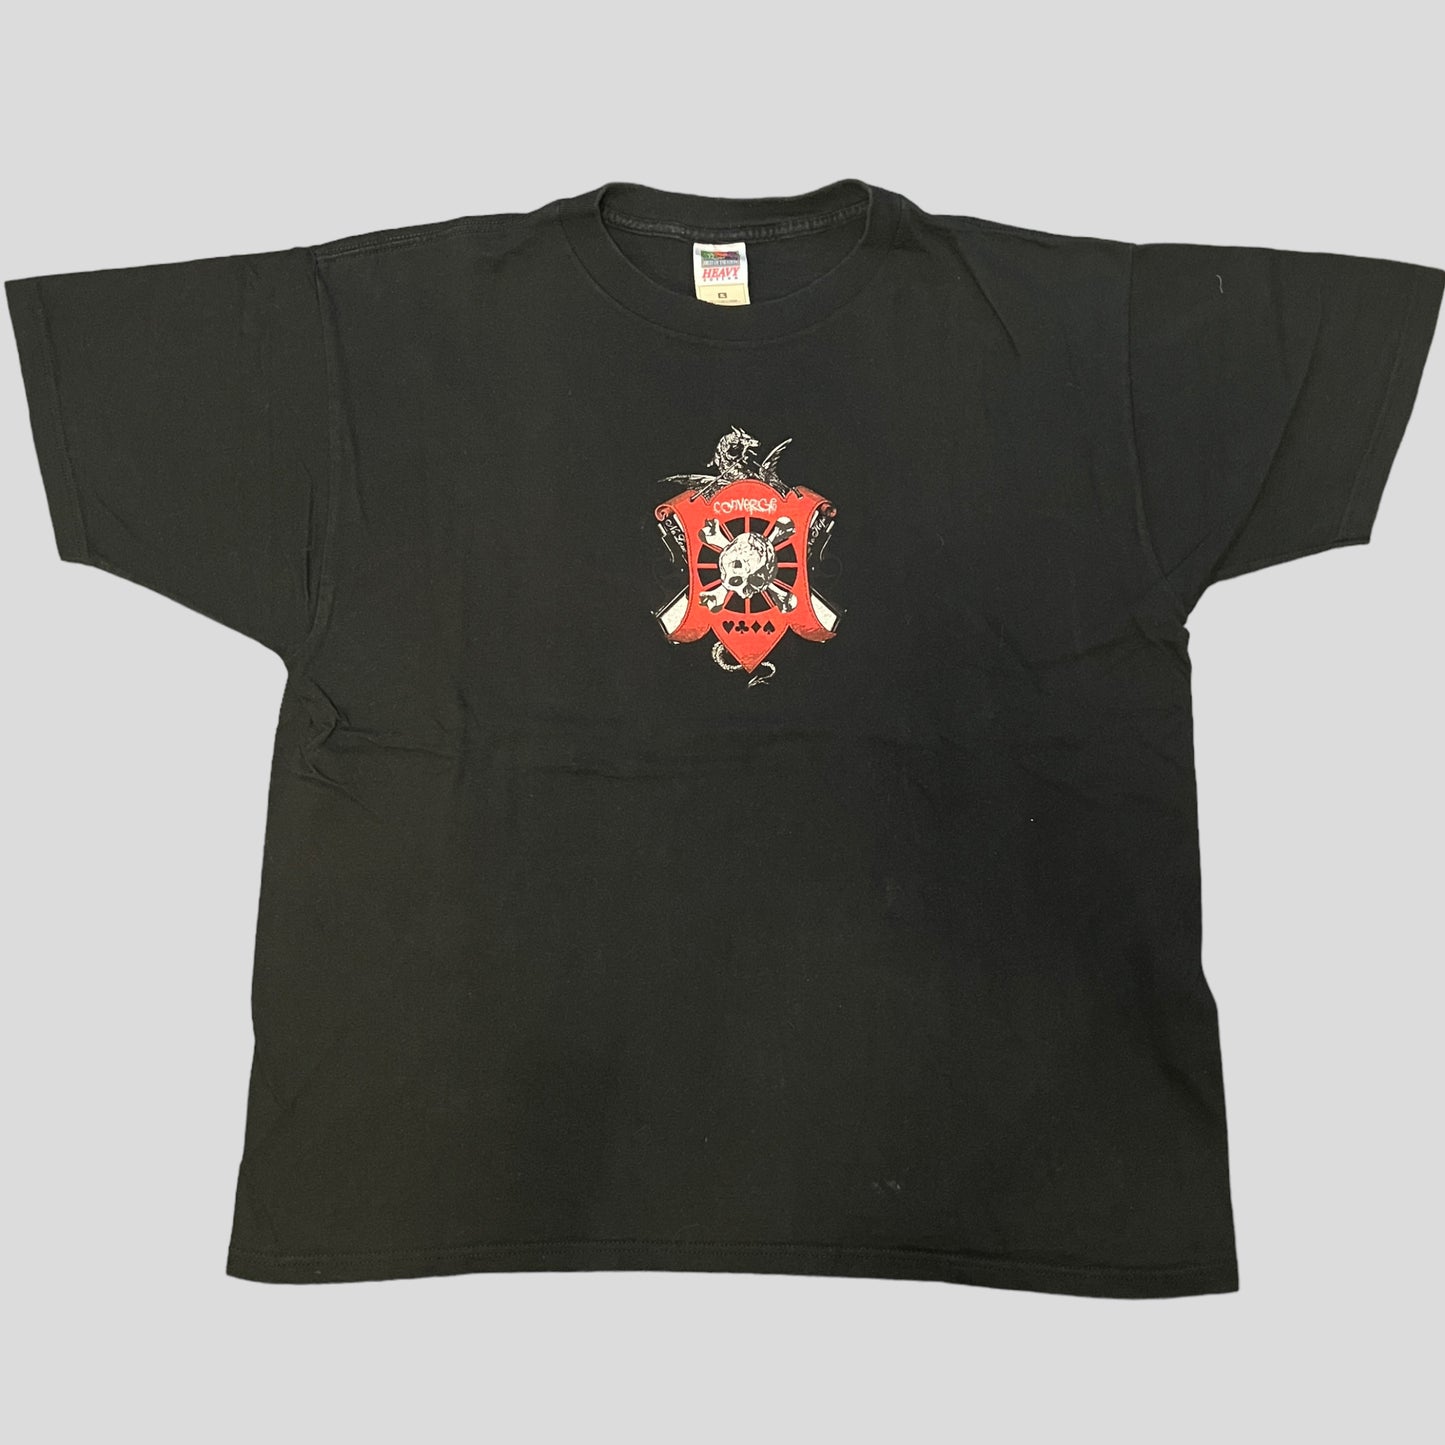 Converge Band Jane Doe Homewrecker Vintage T-Shirt Size XL